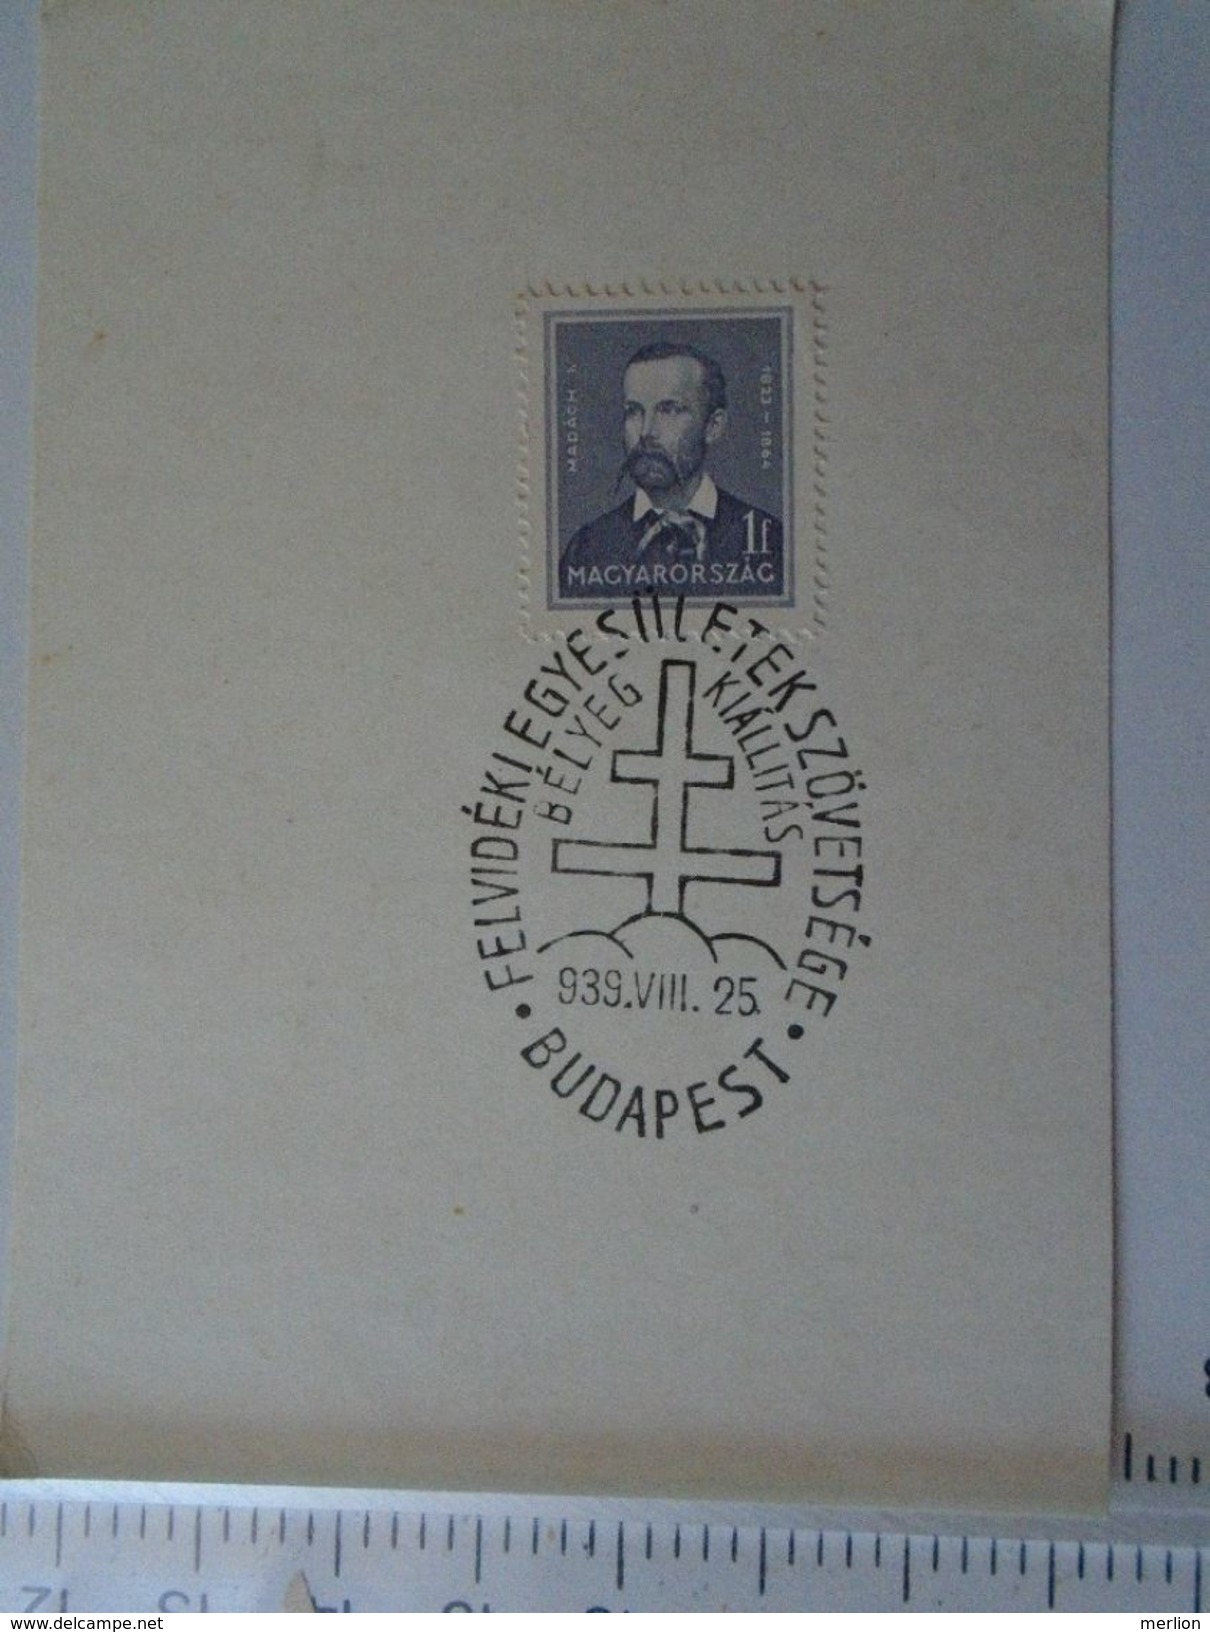 D150995.10  Hungary  Stamp With Cancel  Hungary - Felvidéki Egyesületek Szövetsége - Stamp Exhibition 1939 Budapest - Commemorative Sheets